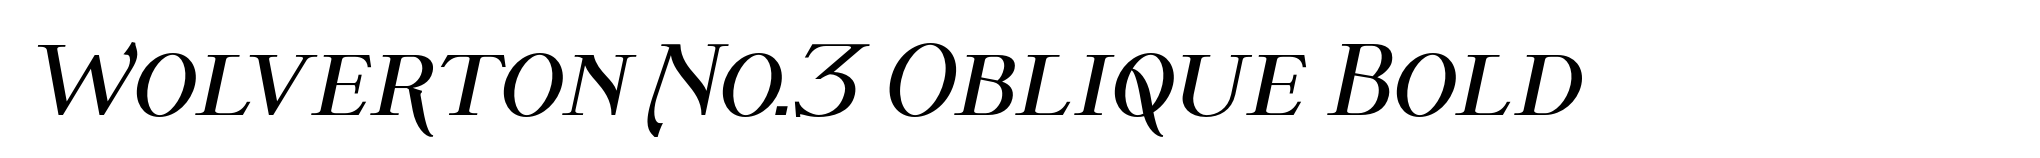 Wolverton No.3 Oblique Bold image